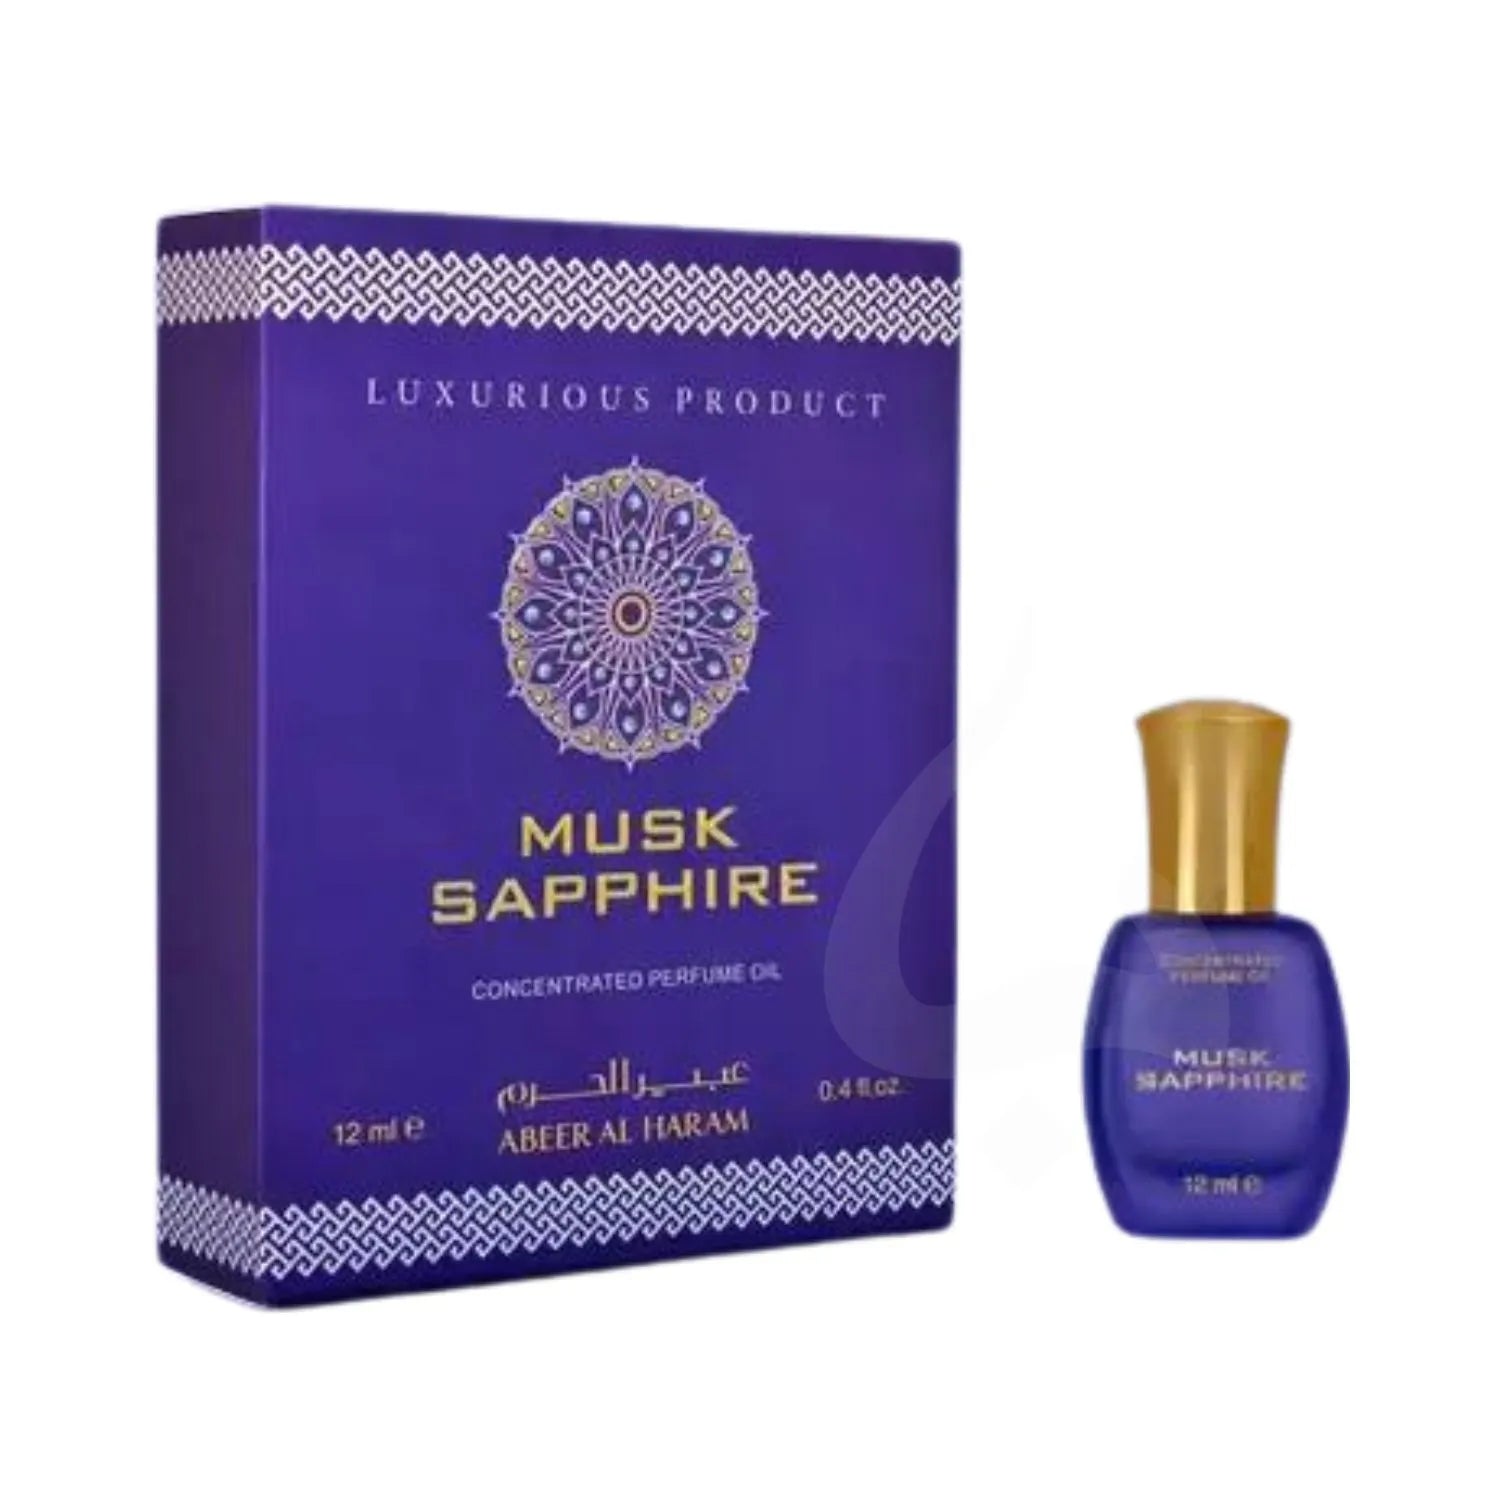 Musk Sapphire Perfume Oil Package